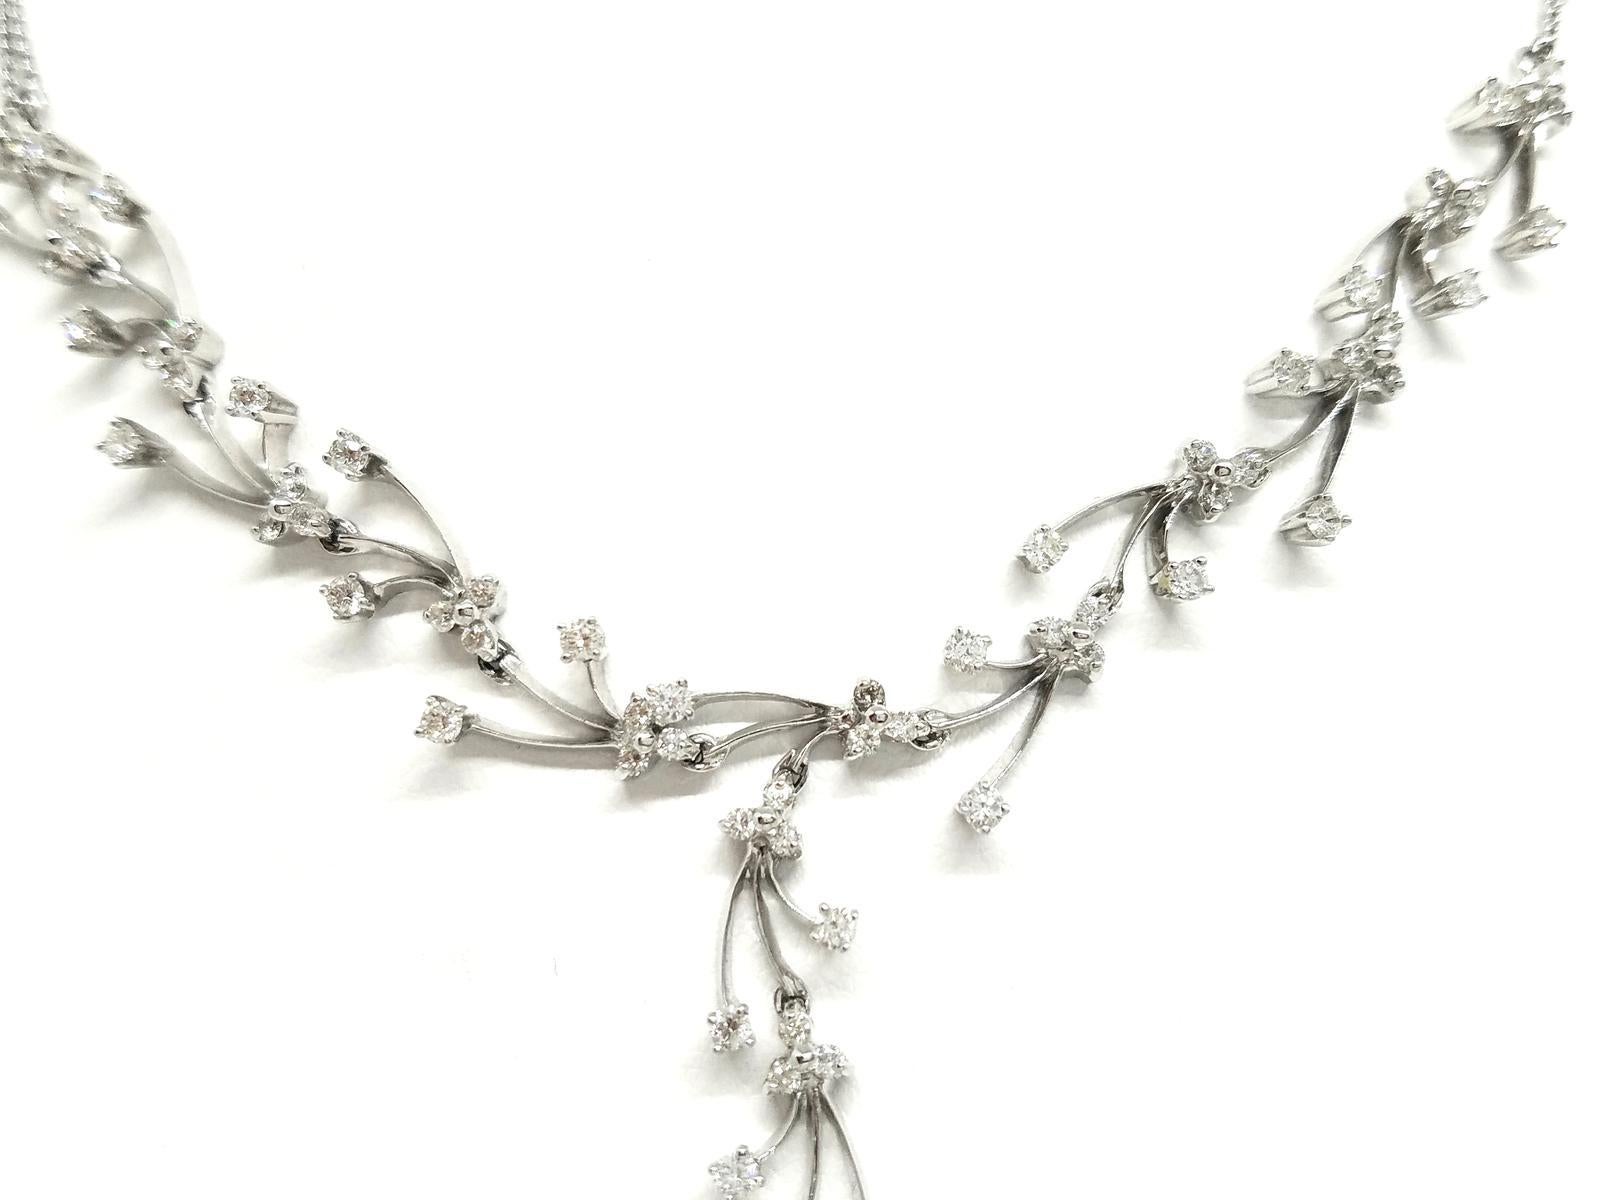 Chain Necklace White GoldDiamond For Sale 15